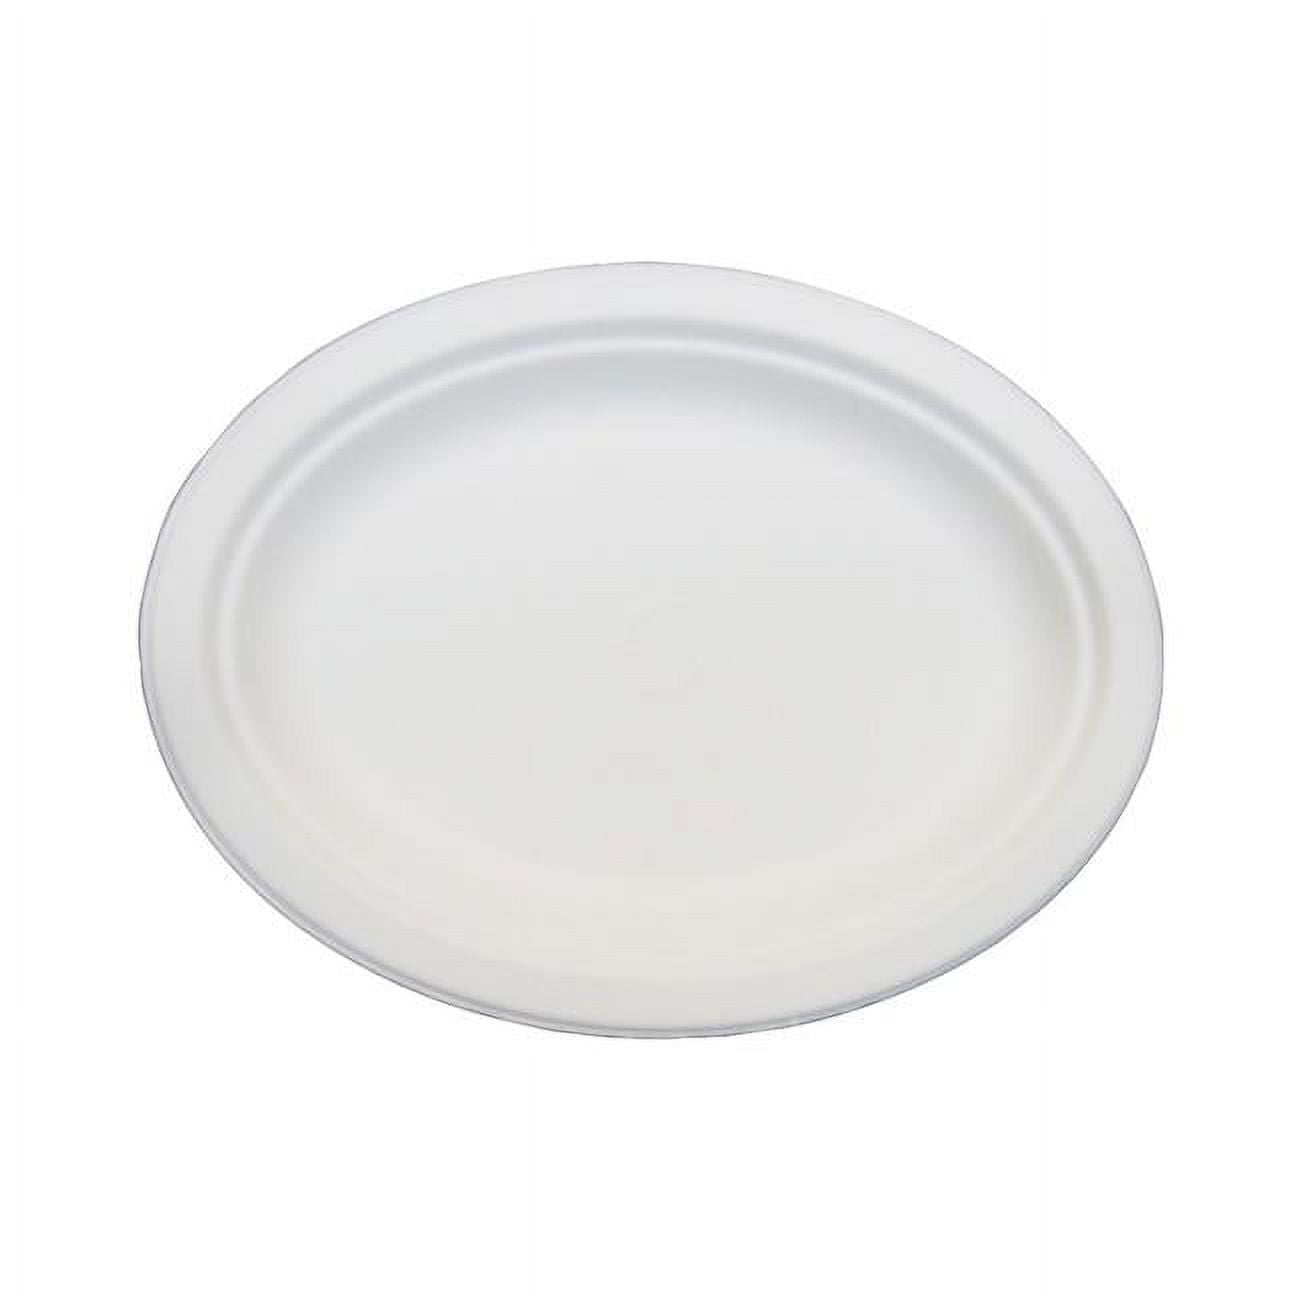 10 X 12.5 In. Bagasse Evolution Oval Platter, White